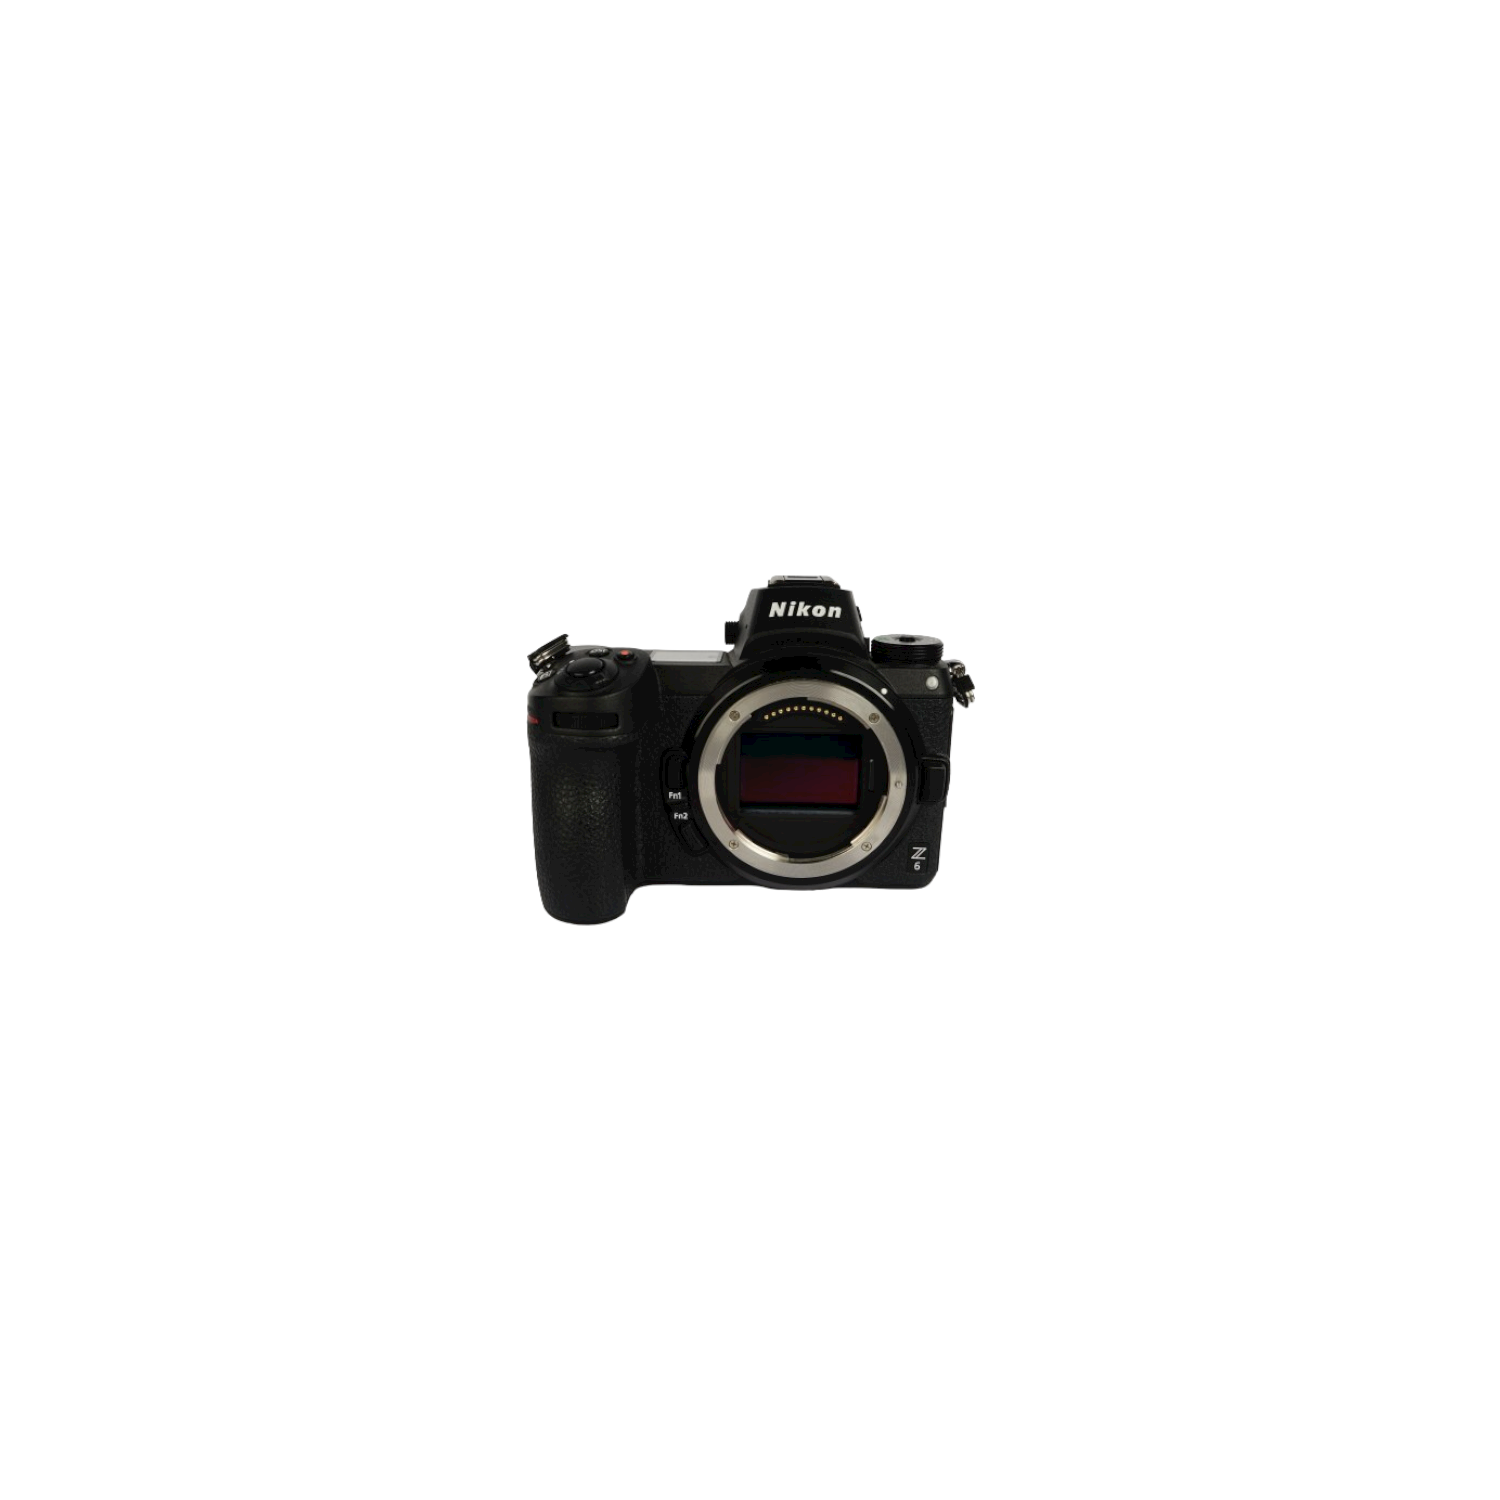 Refurbished (Good) - Nikon Z6 24.5MP Professional Mirrorless Camera Bundle with Bag and Strap